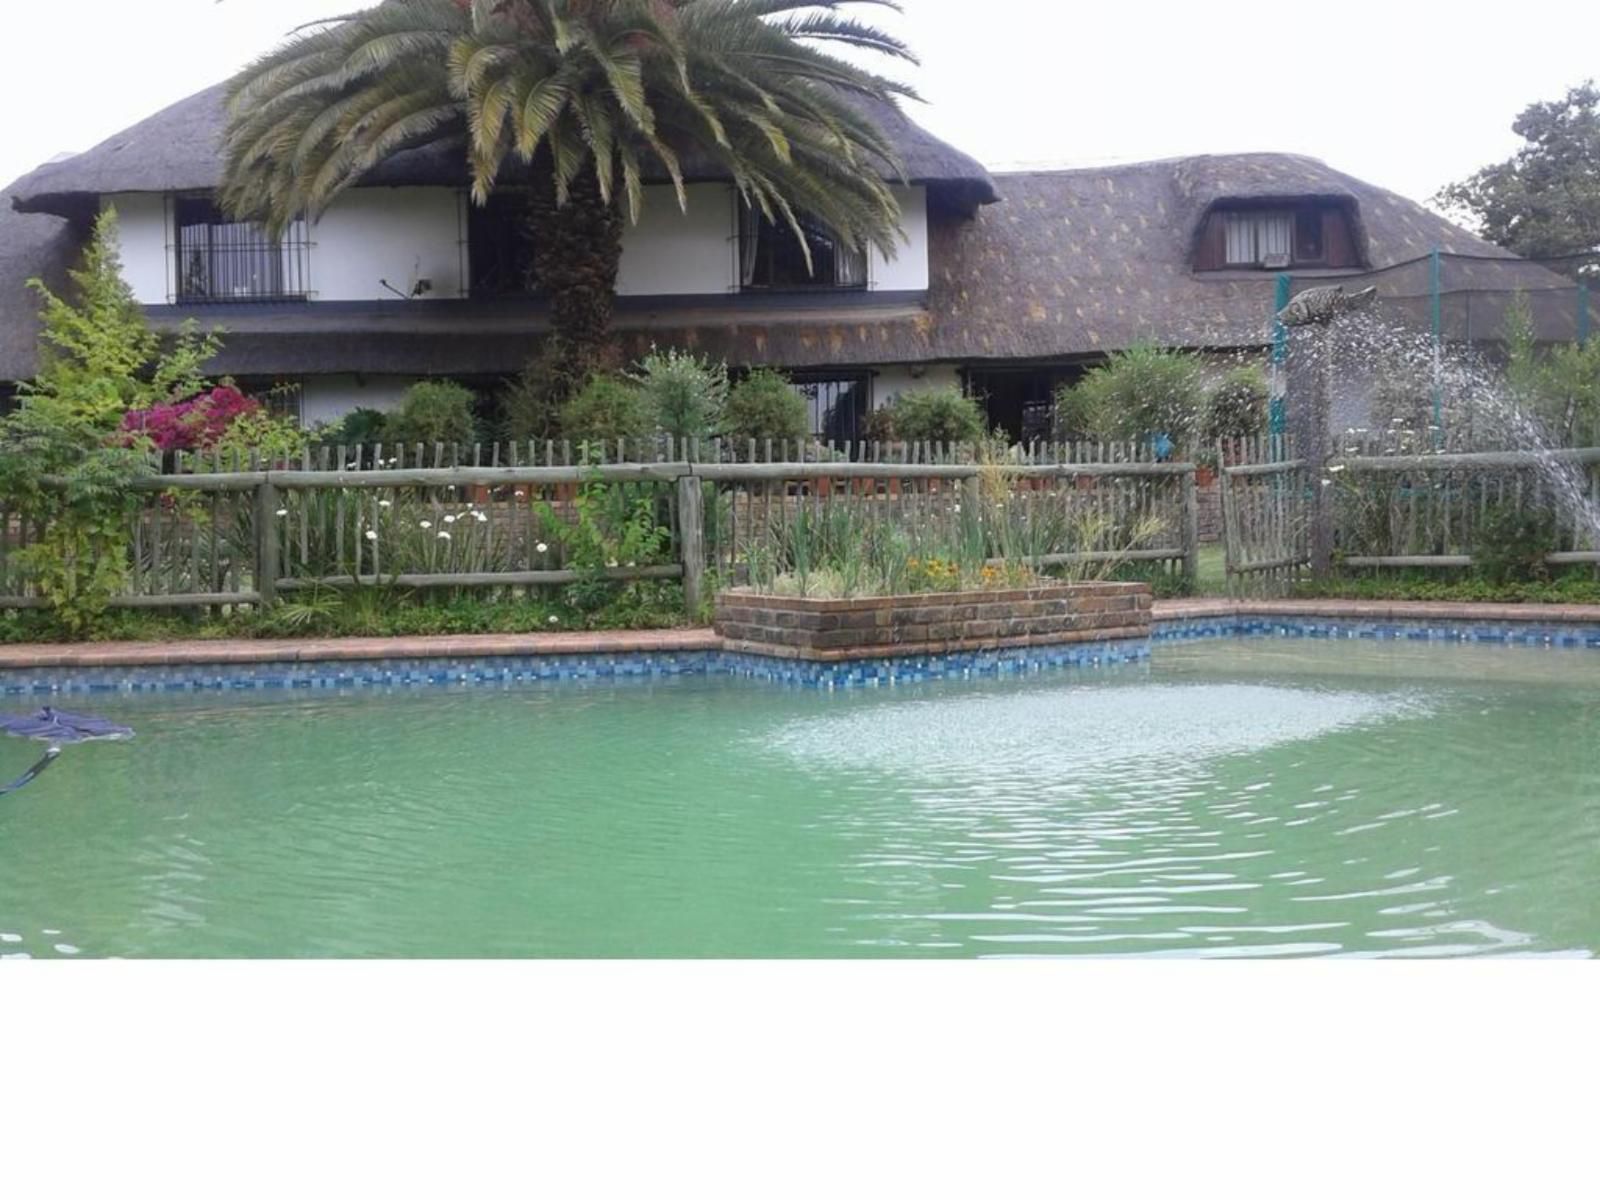 Damfela Ecolodge Midrand Glen Austin Johannesburg Gauteng South Africa House, Building, Architecture, Palm Tree, Plant, Nature, Wood, Garden, Swimming Pool